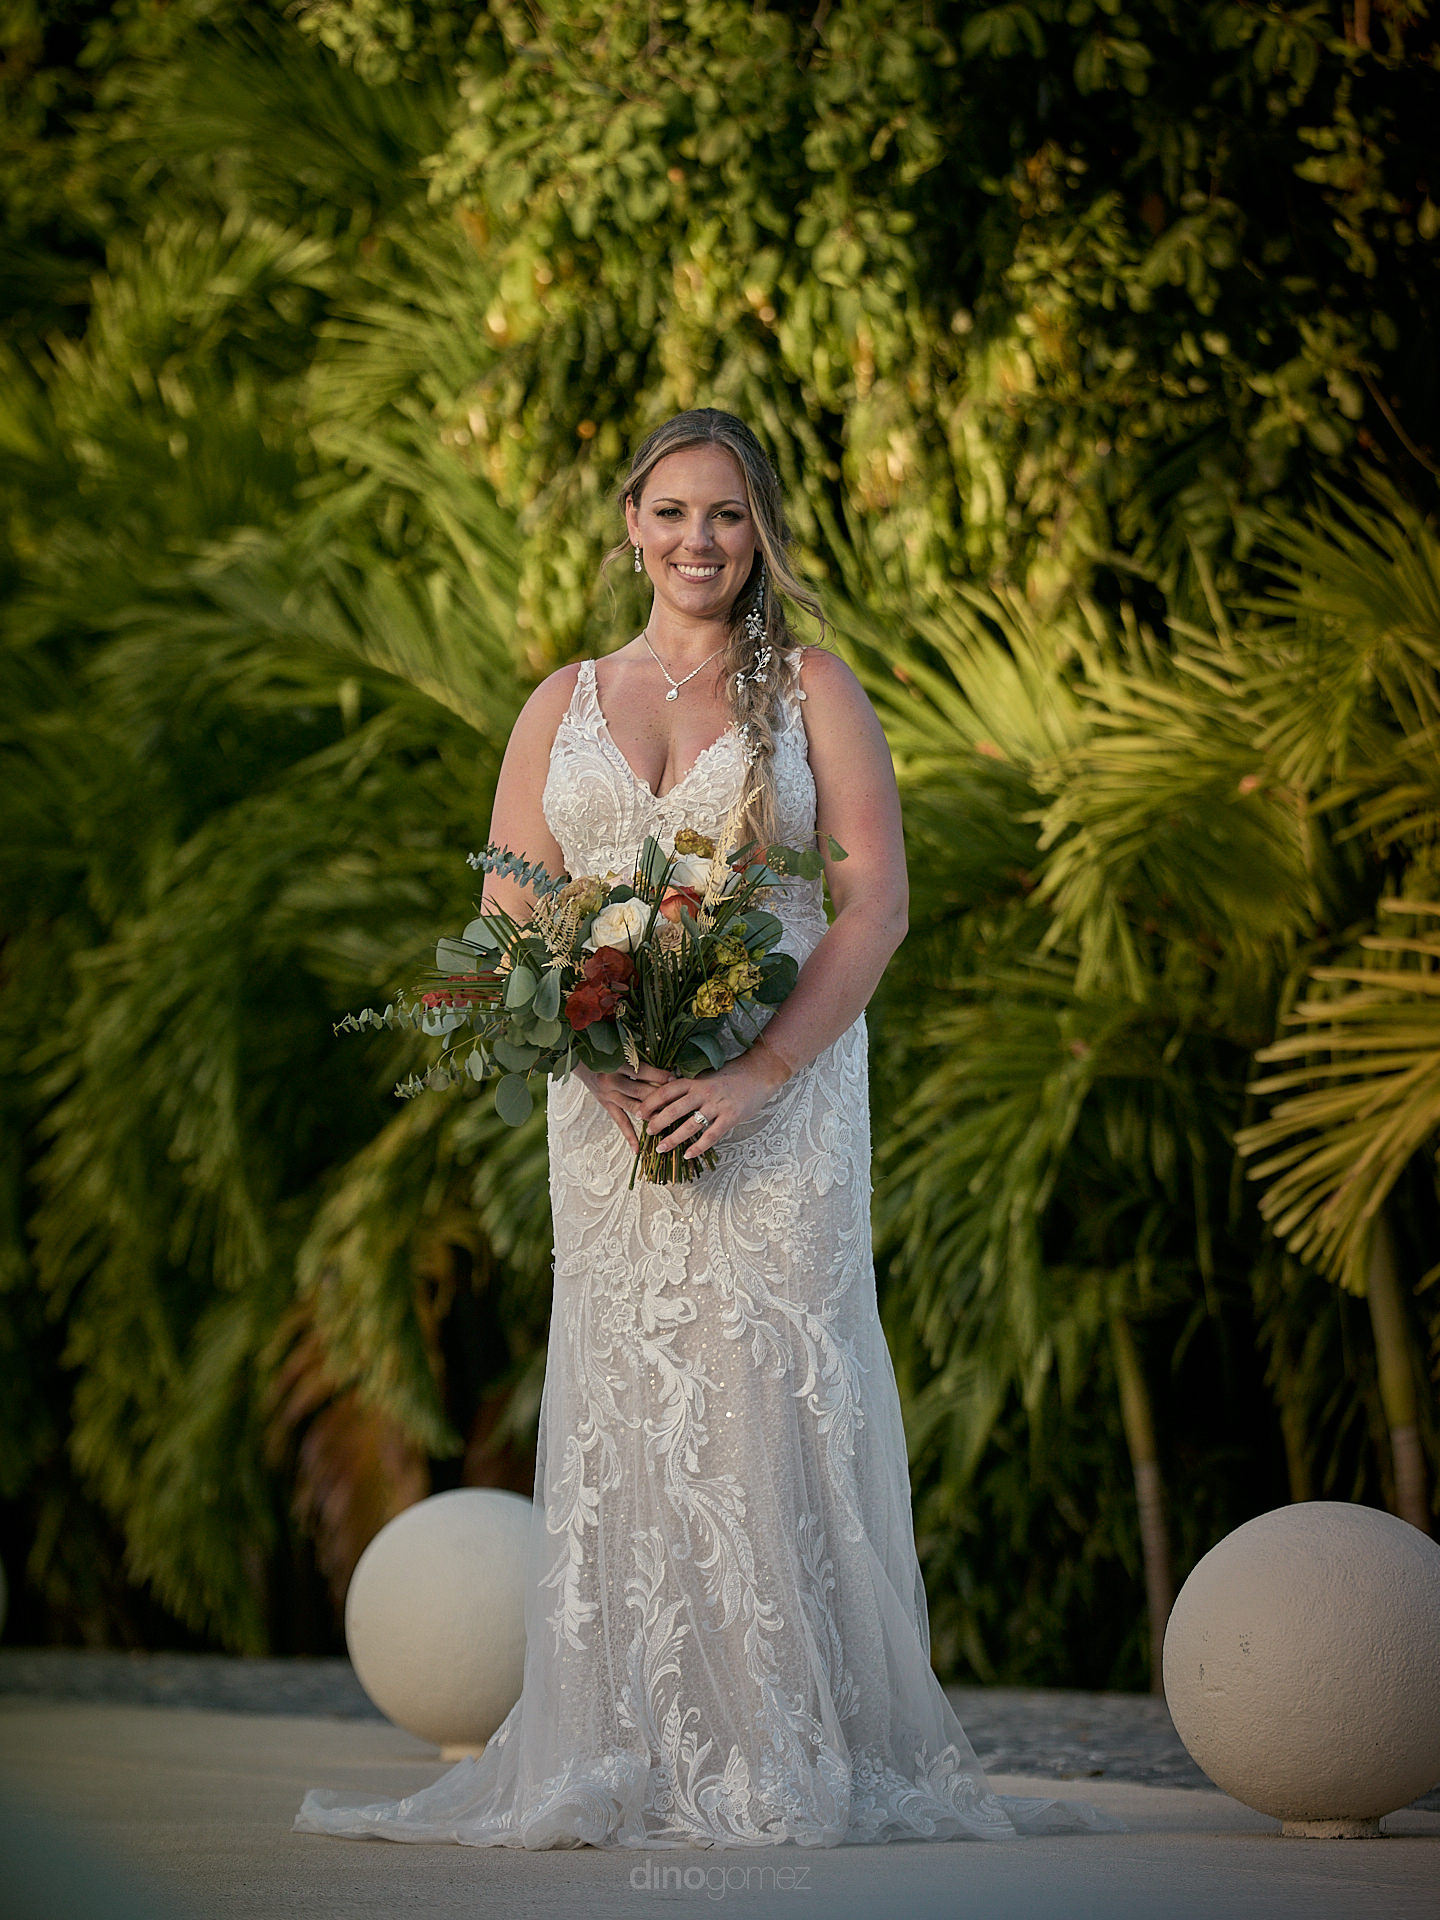 Best Cancun Wedding Photographer Dino Gomez At The Paradisus Playa Del Carmen